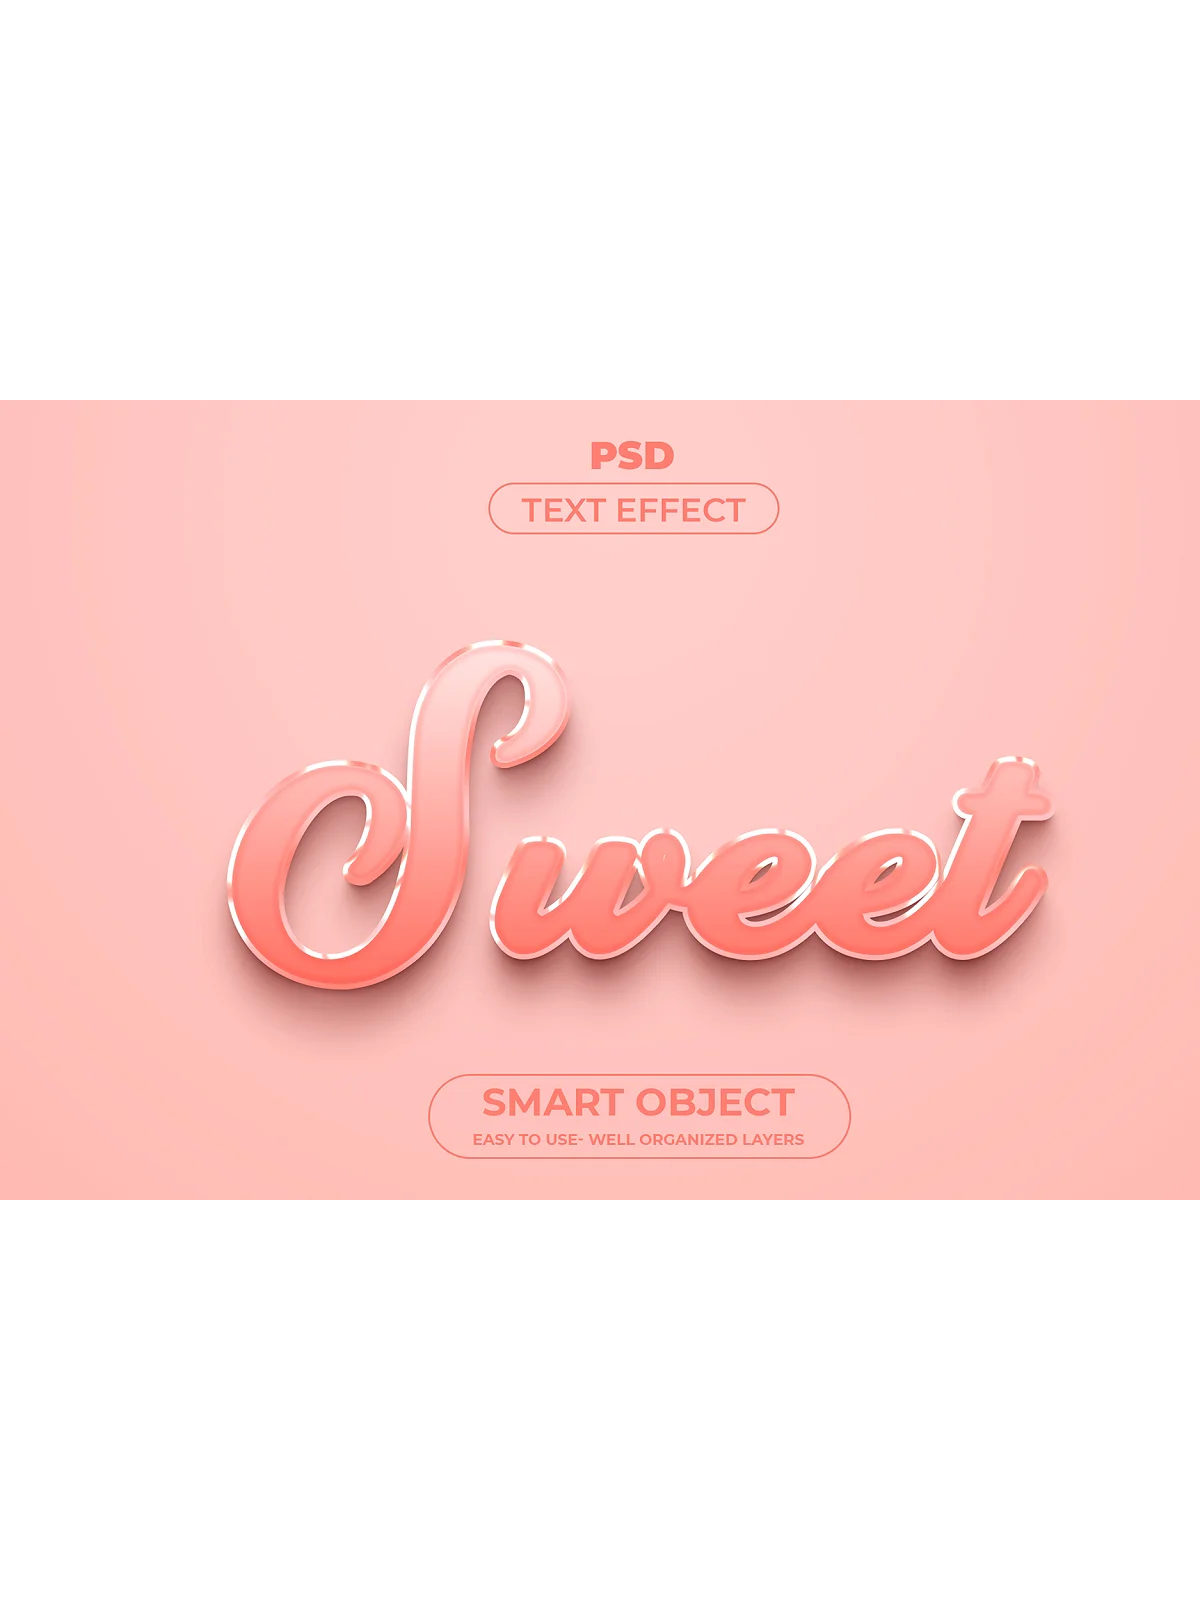 Sweet 3d editable text effect style pinterest image.